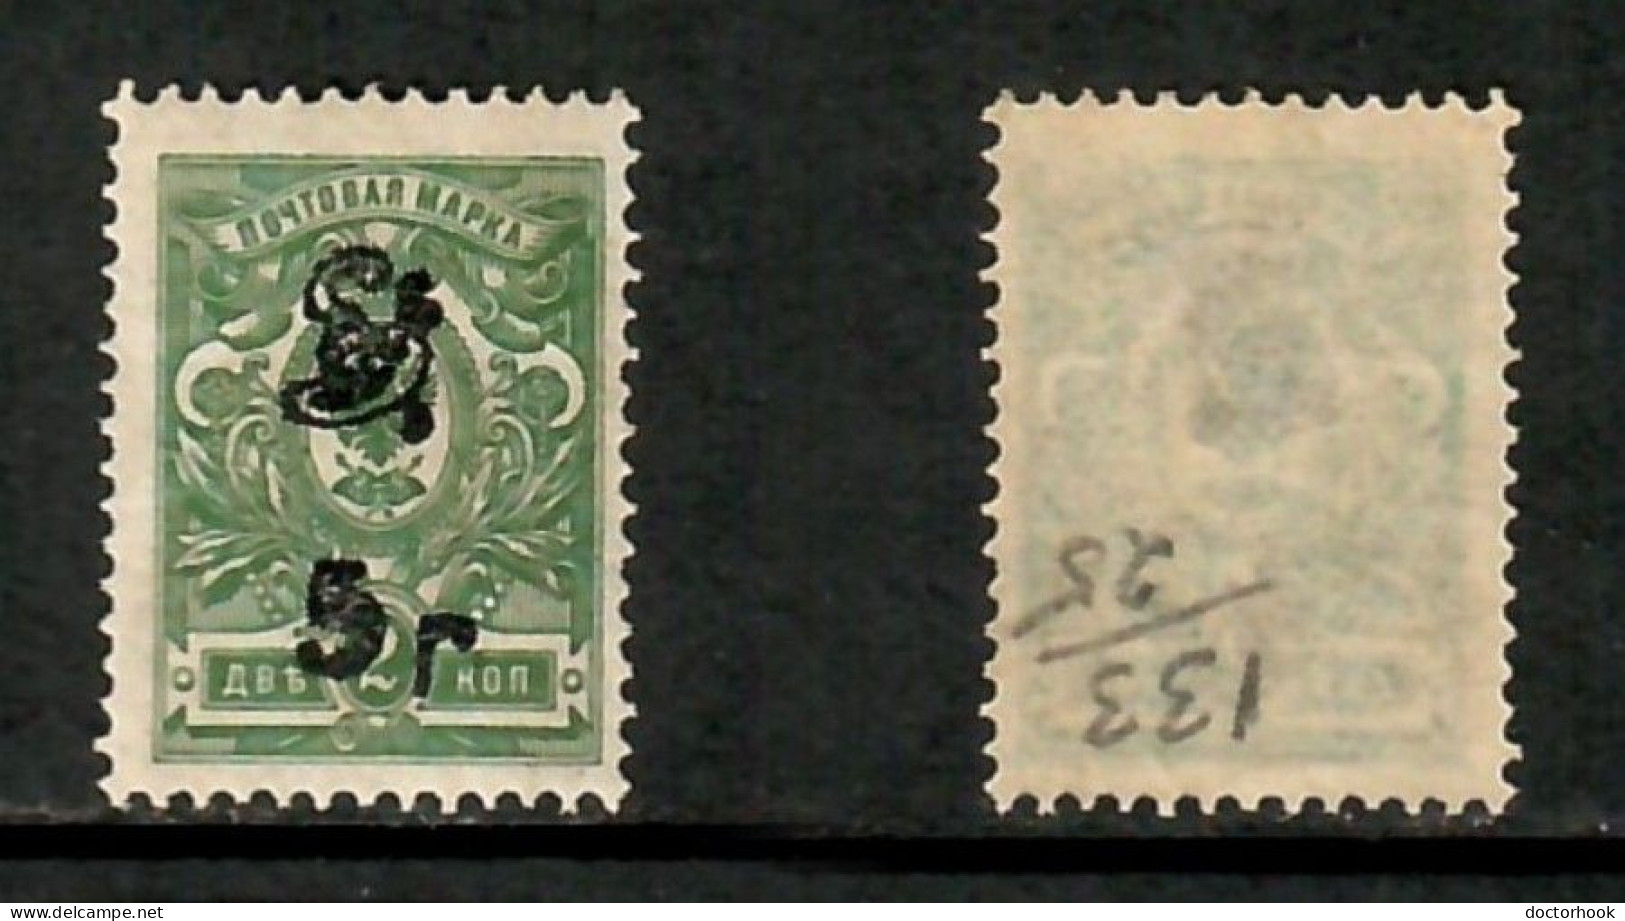 ARMENIA    Scott # 133a* MINT LH (CONDITION PER SCAN) (Stamp Scan # 1044-4) - Armenien